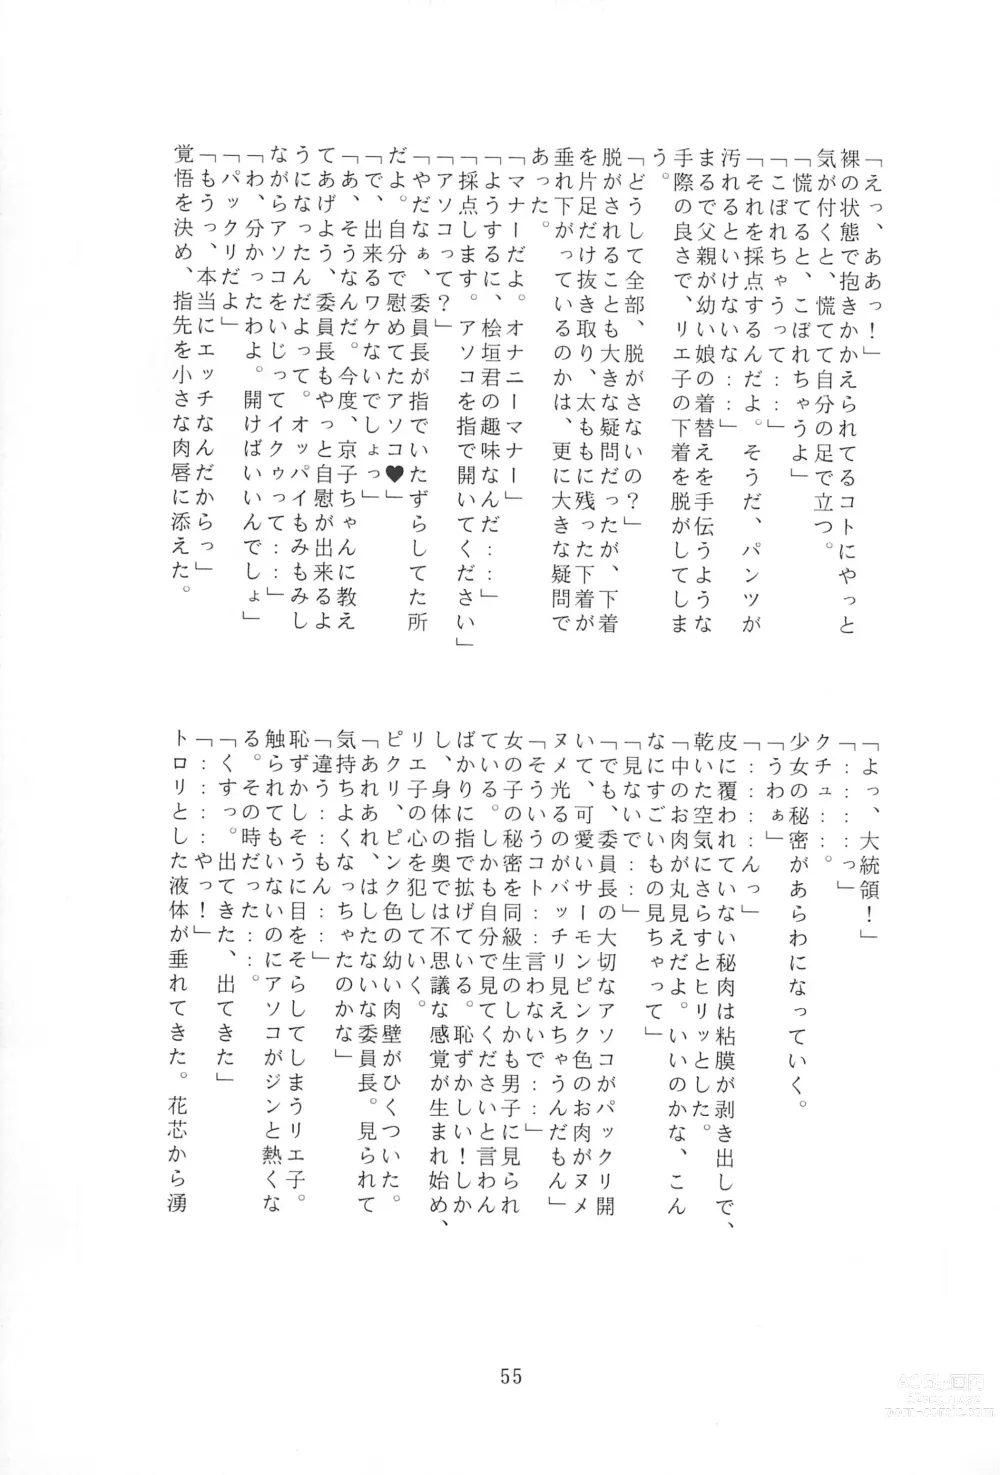 Page 55 of doujinshi JANGLE ONI Mermaid